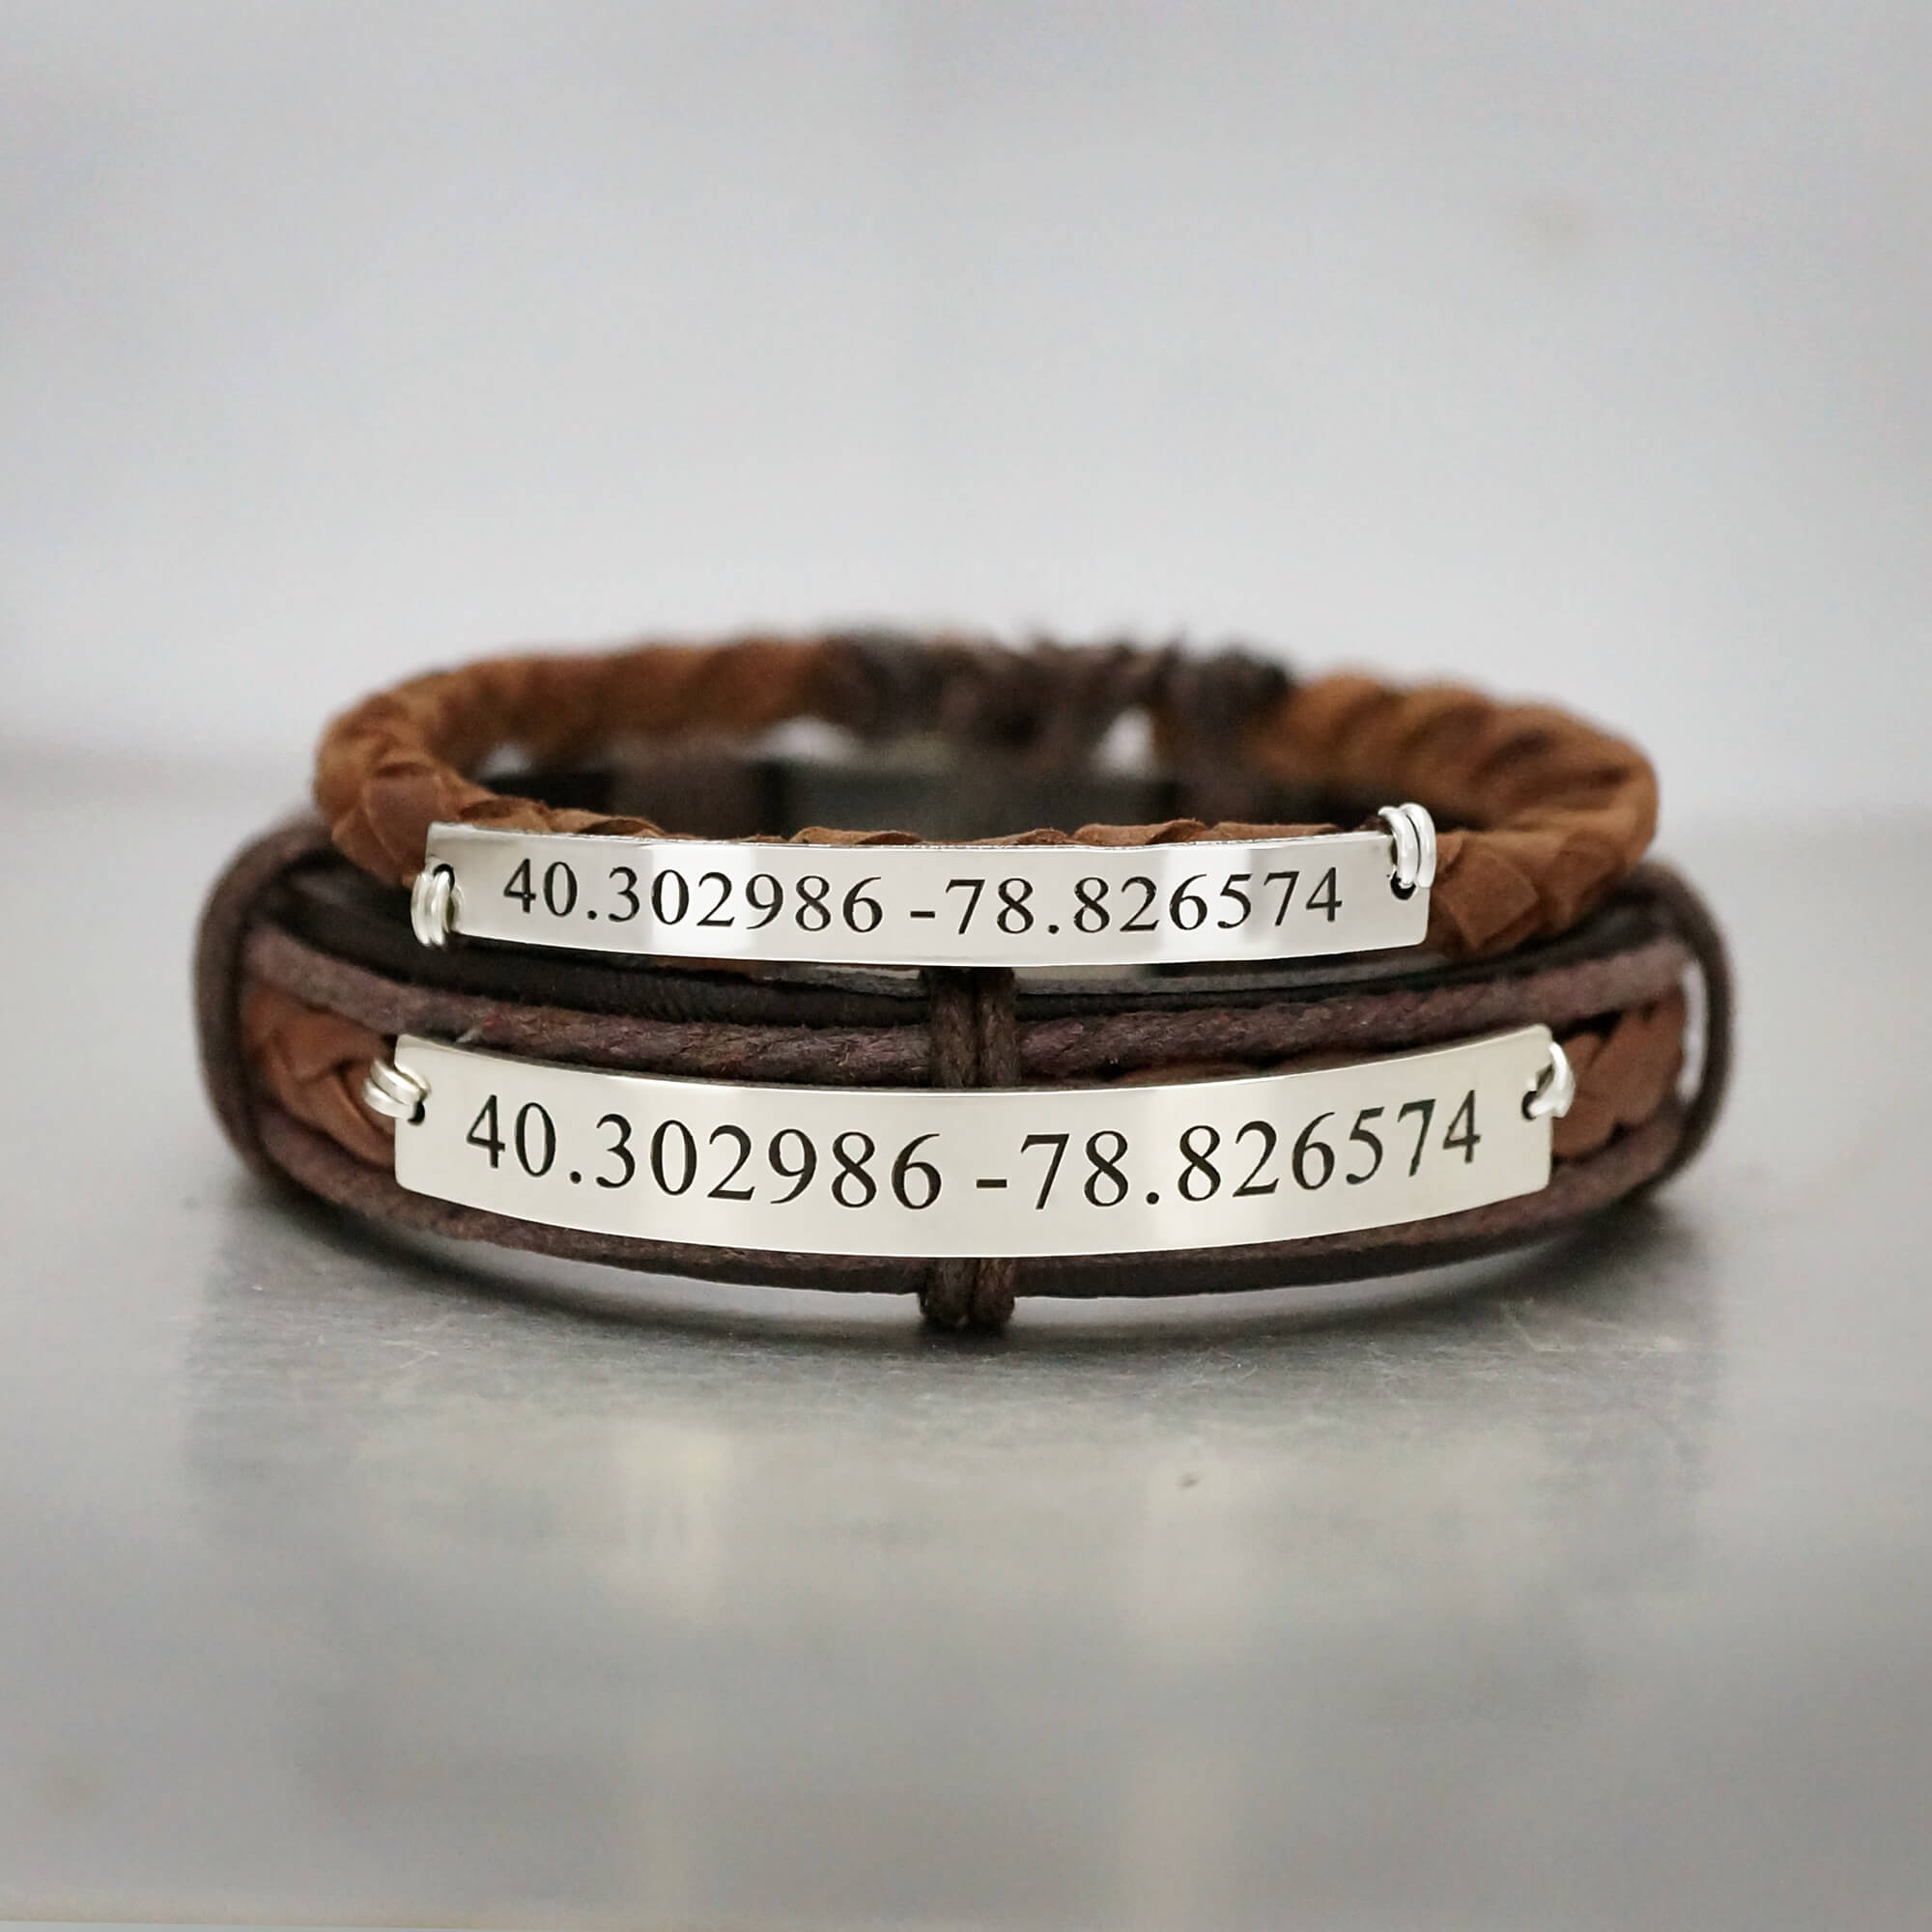 Coordinate Bracelets for Him and Her, Longitude and Latitude Bracelets